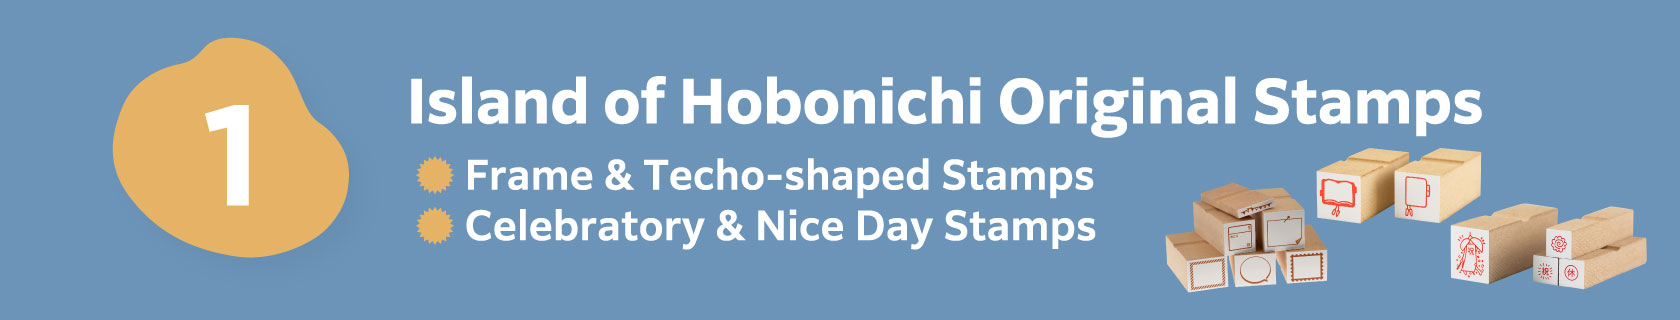 1 Island of Hobonichi Original Stamps